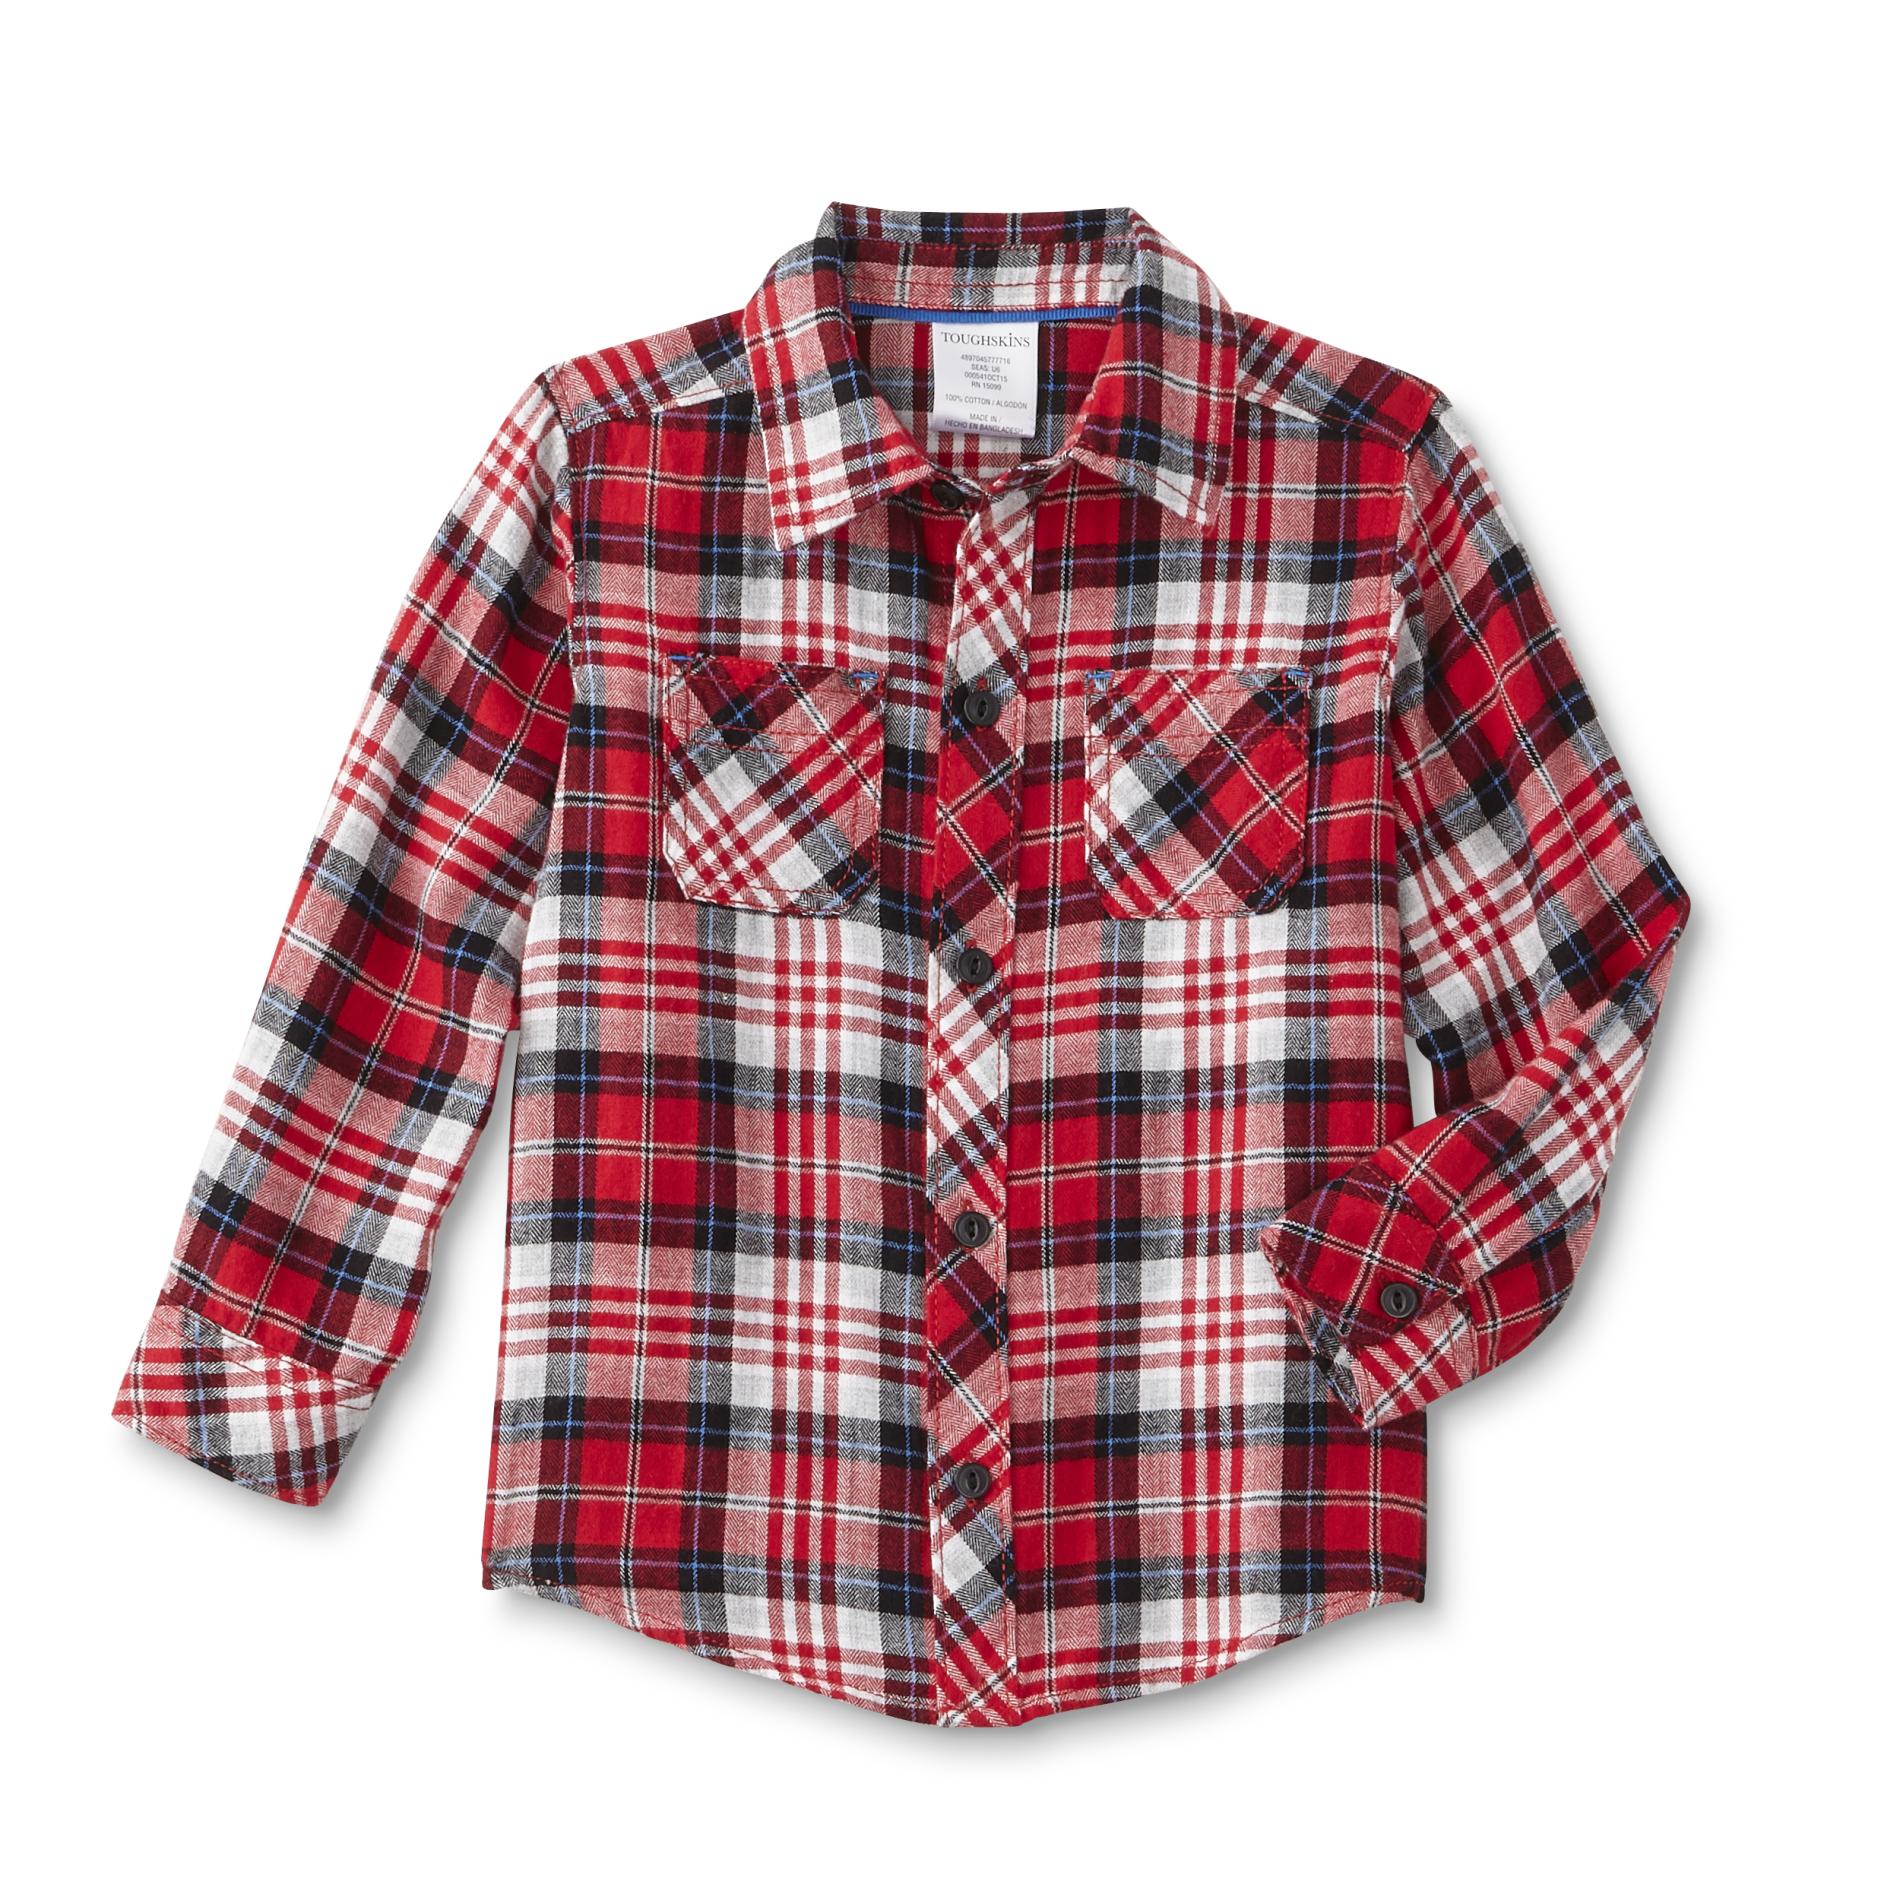 Toughskins Infant & Toddler Boy's Flannel Shirt - Red Plaid